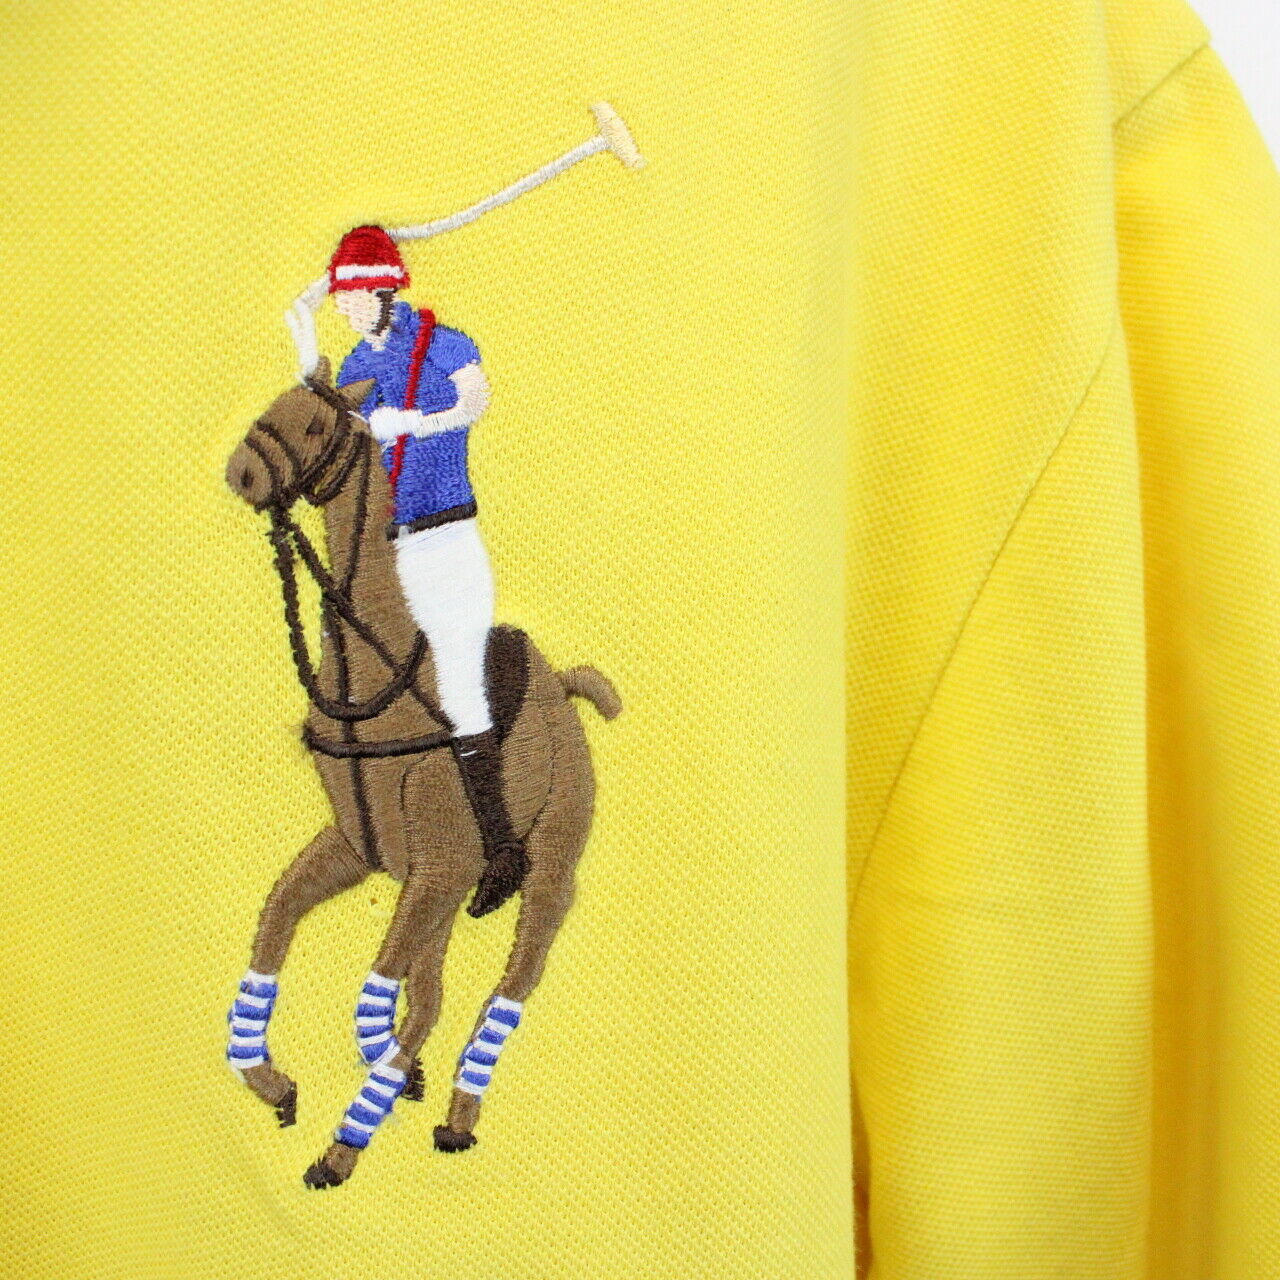 RALPH LAUREN Polo Shirt Yellow | Large